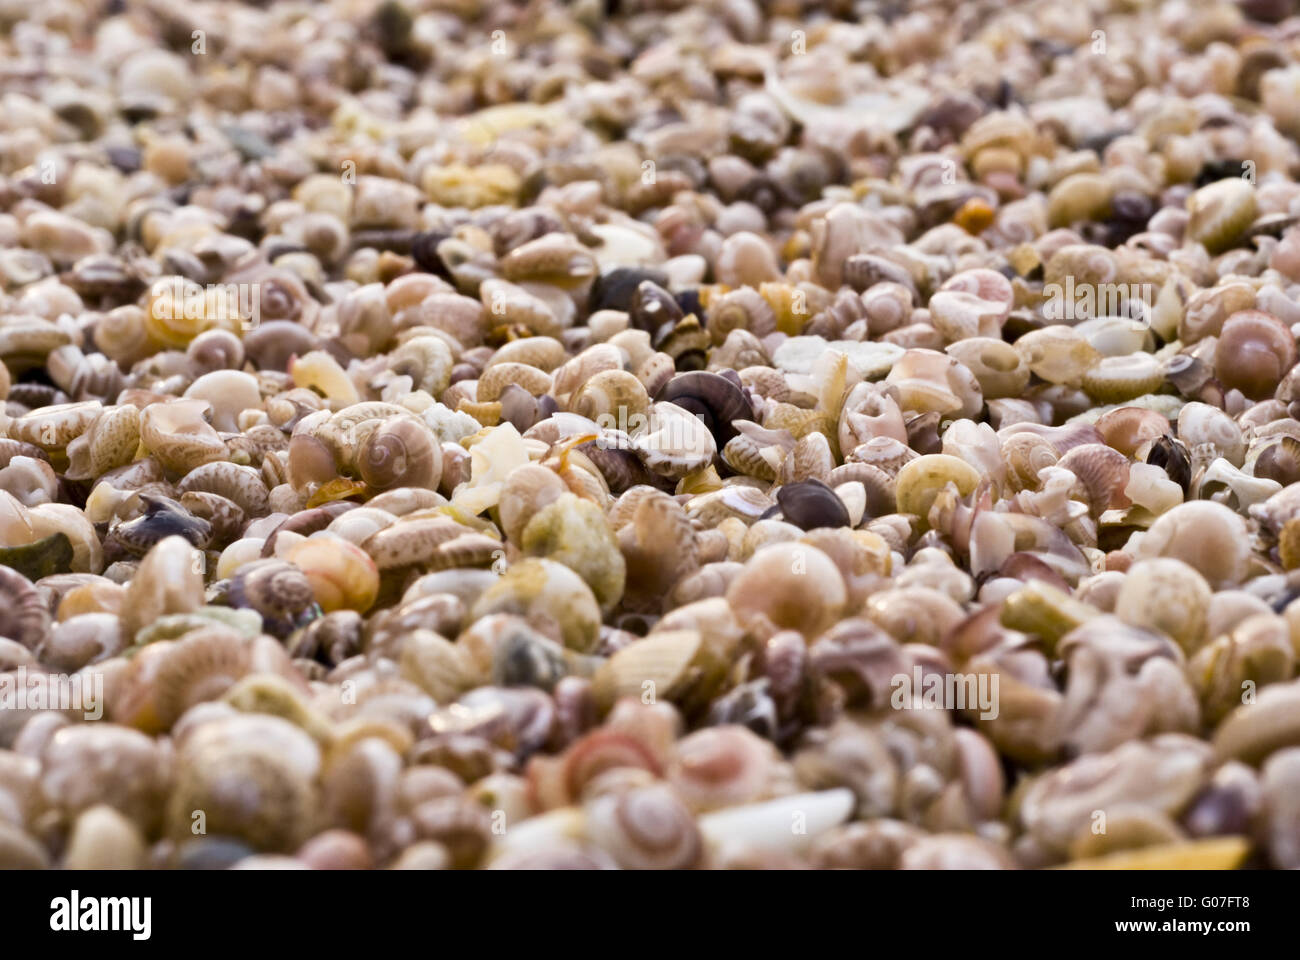 Snails on the beach Stock Photo